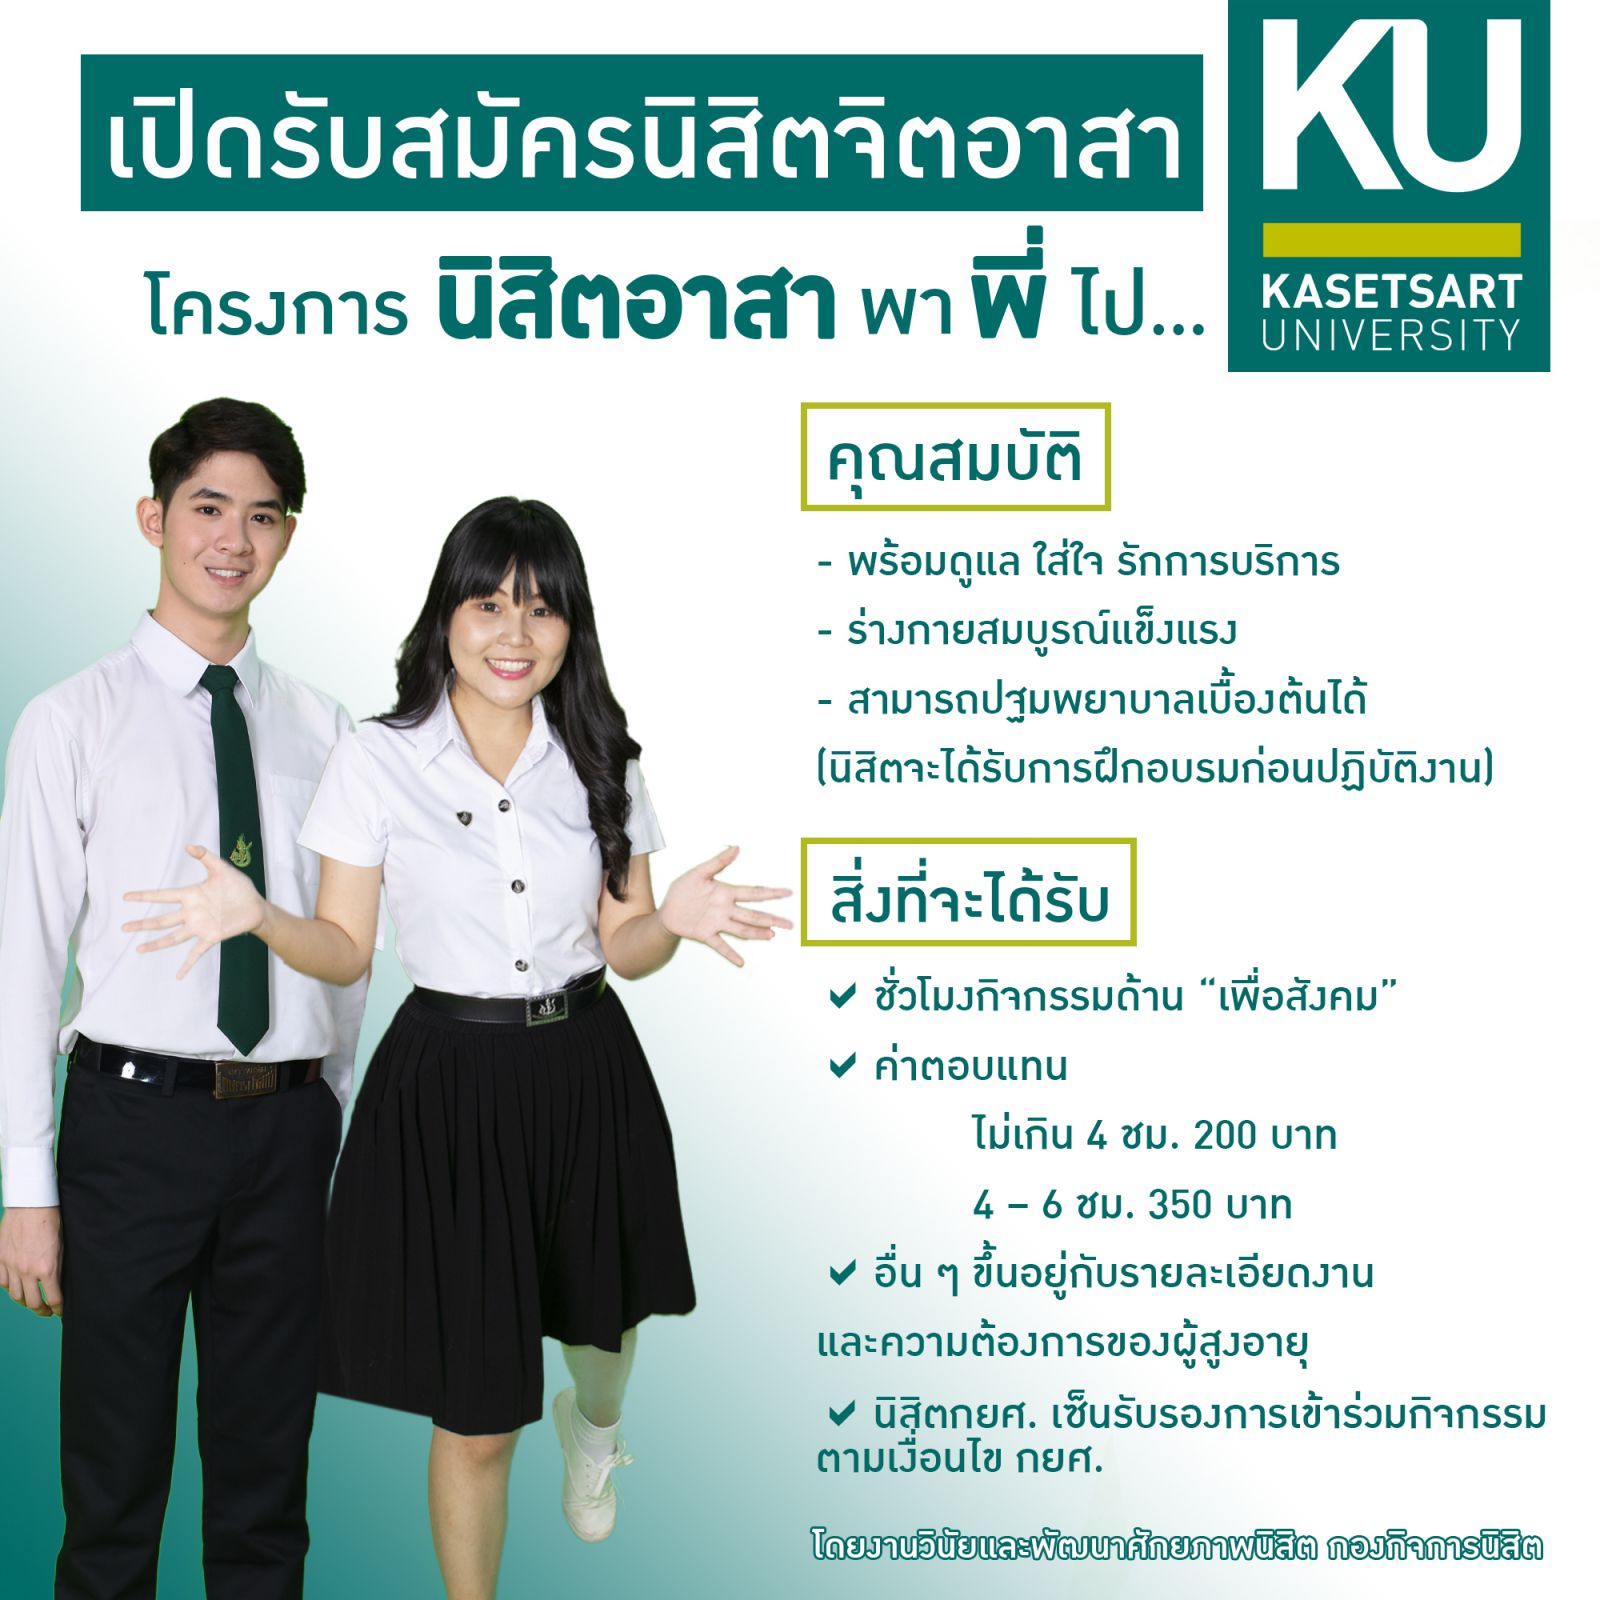 Kasetsart University - มหาวิทยาลัยเกษตรศาสตร์